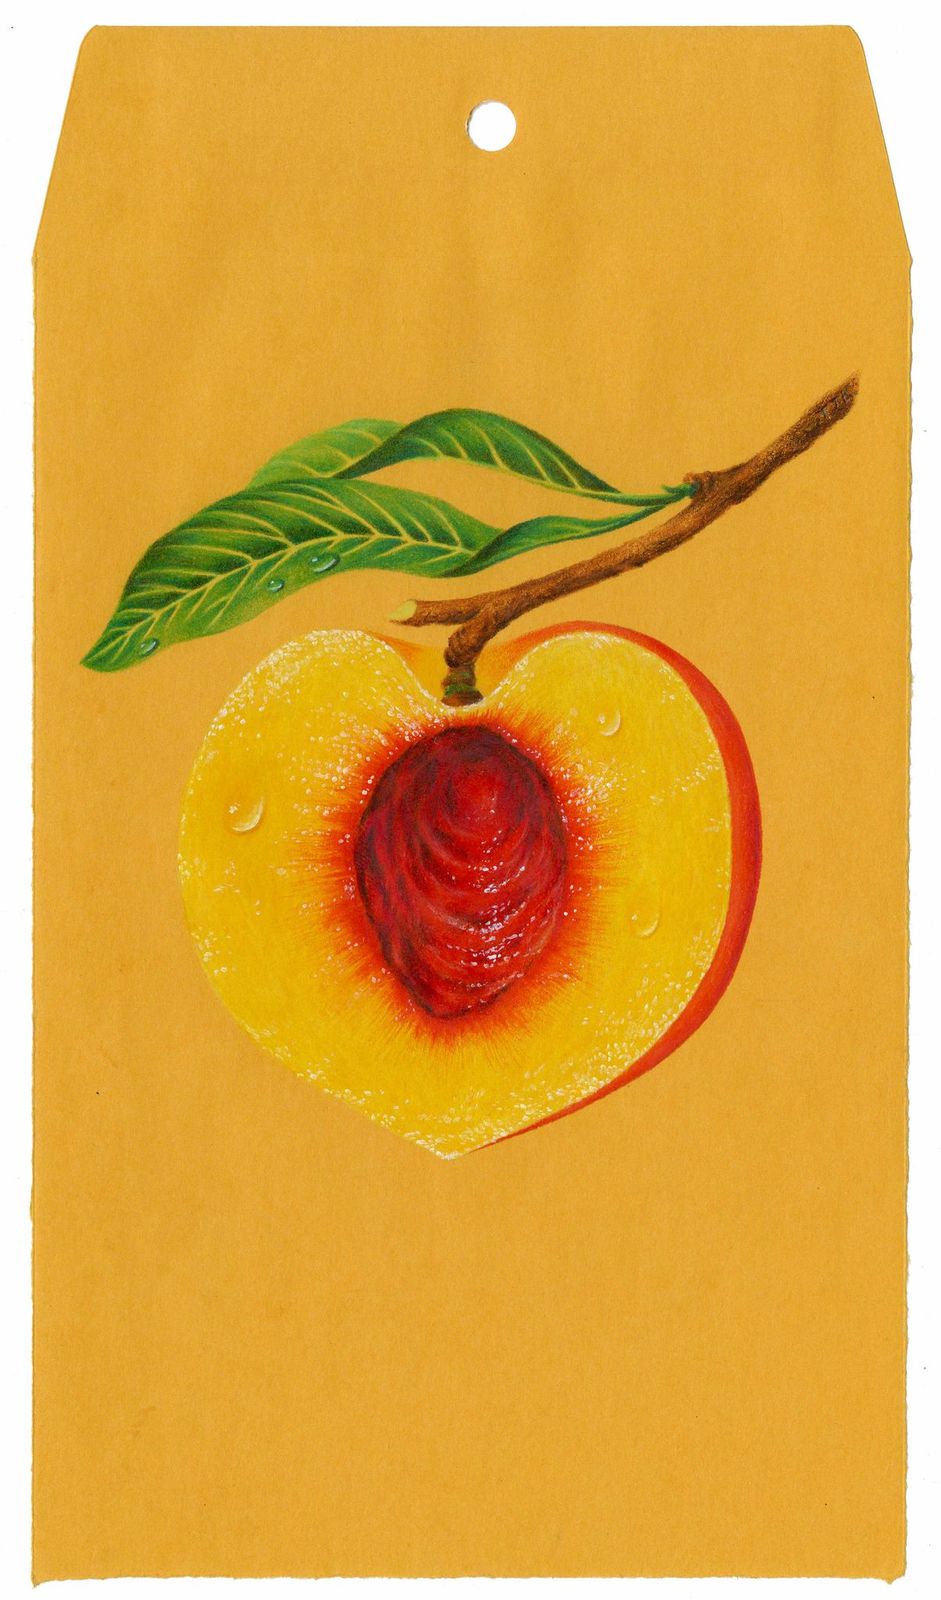 Tyler Krasowski, "peaches en regalia" SOLD